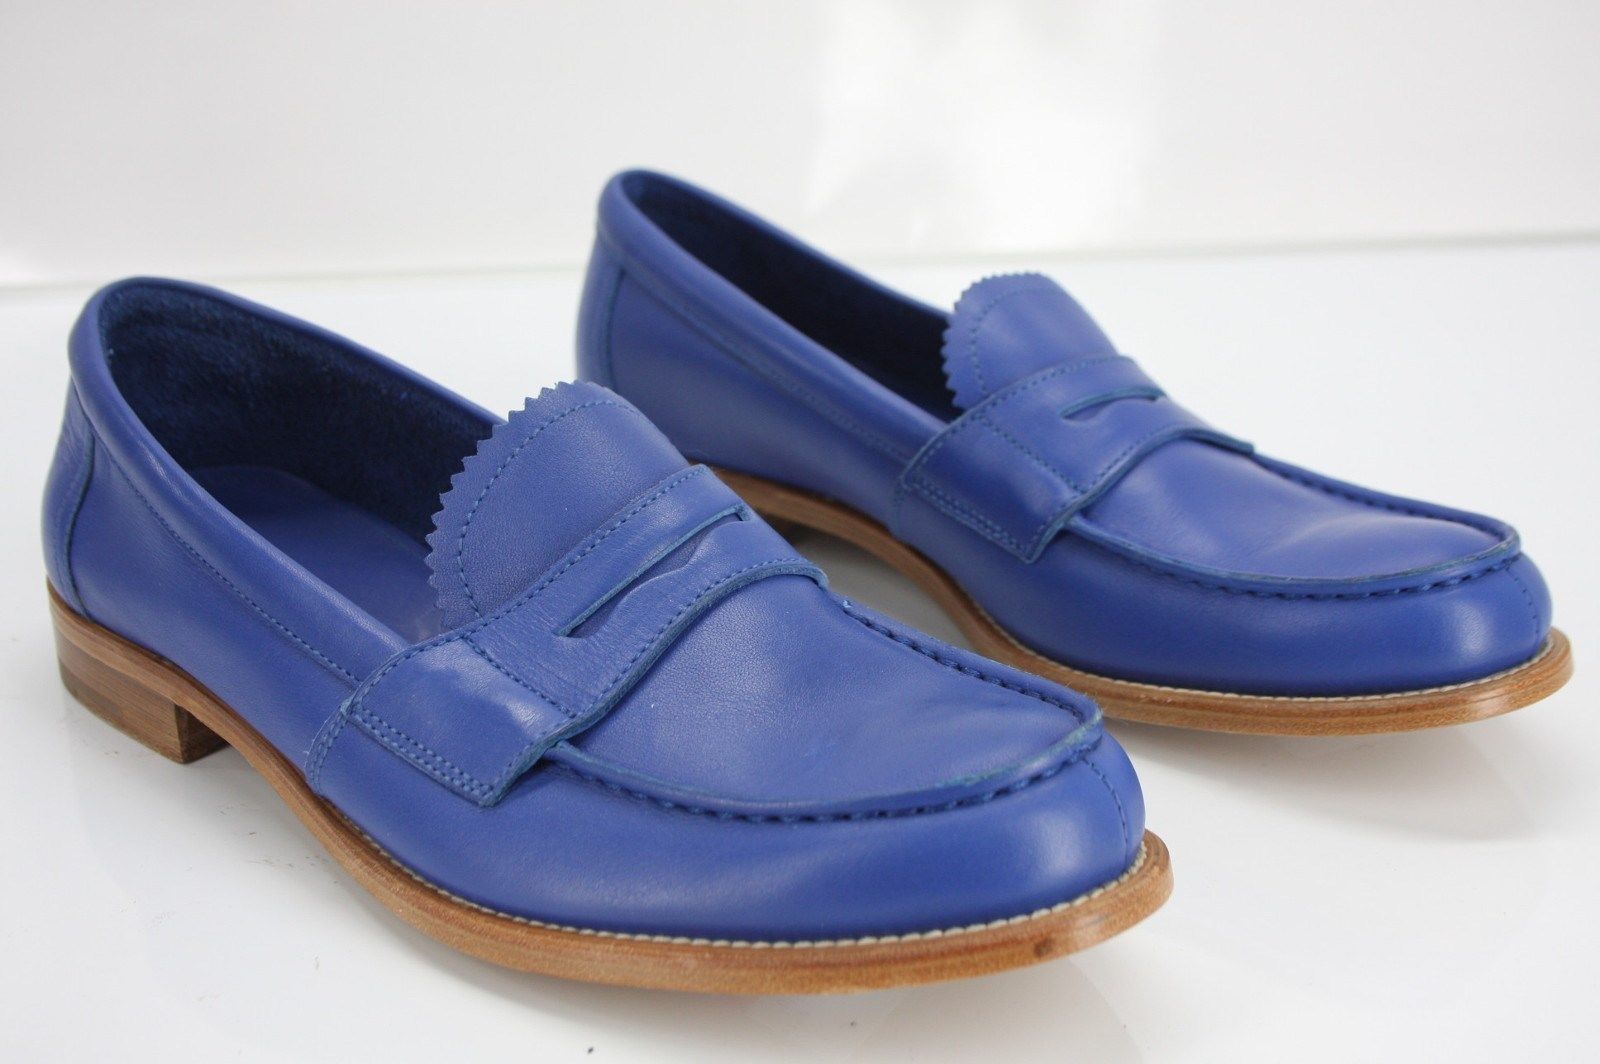 Prada Blue Leather Slip On Penny Loafer Shoes Size 39.5 Women's $650 New logo Sz